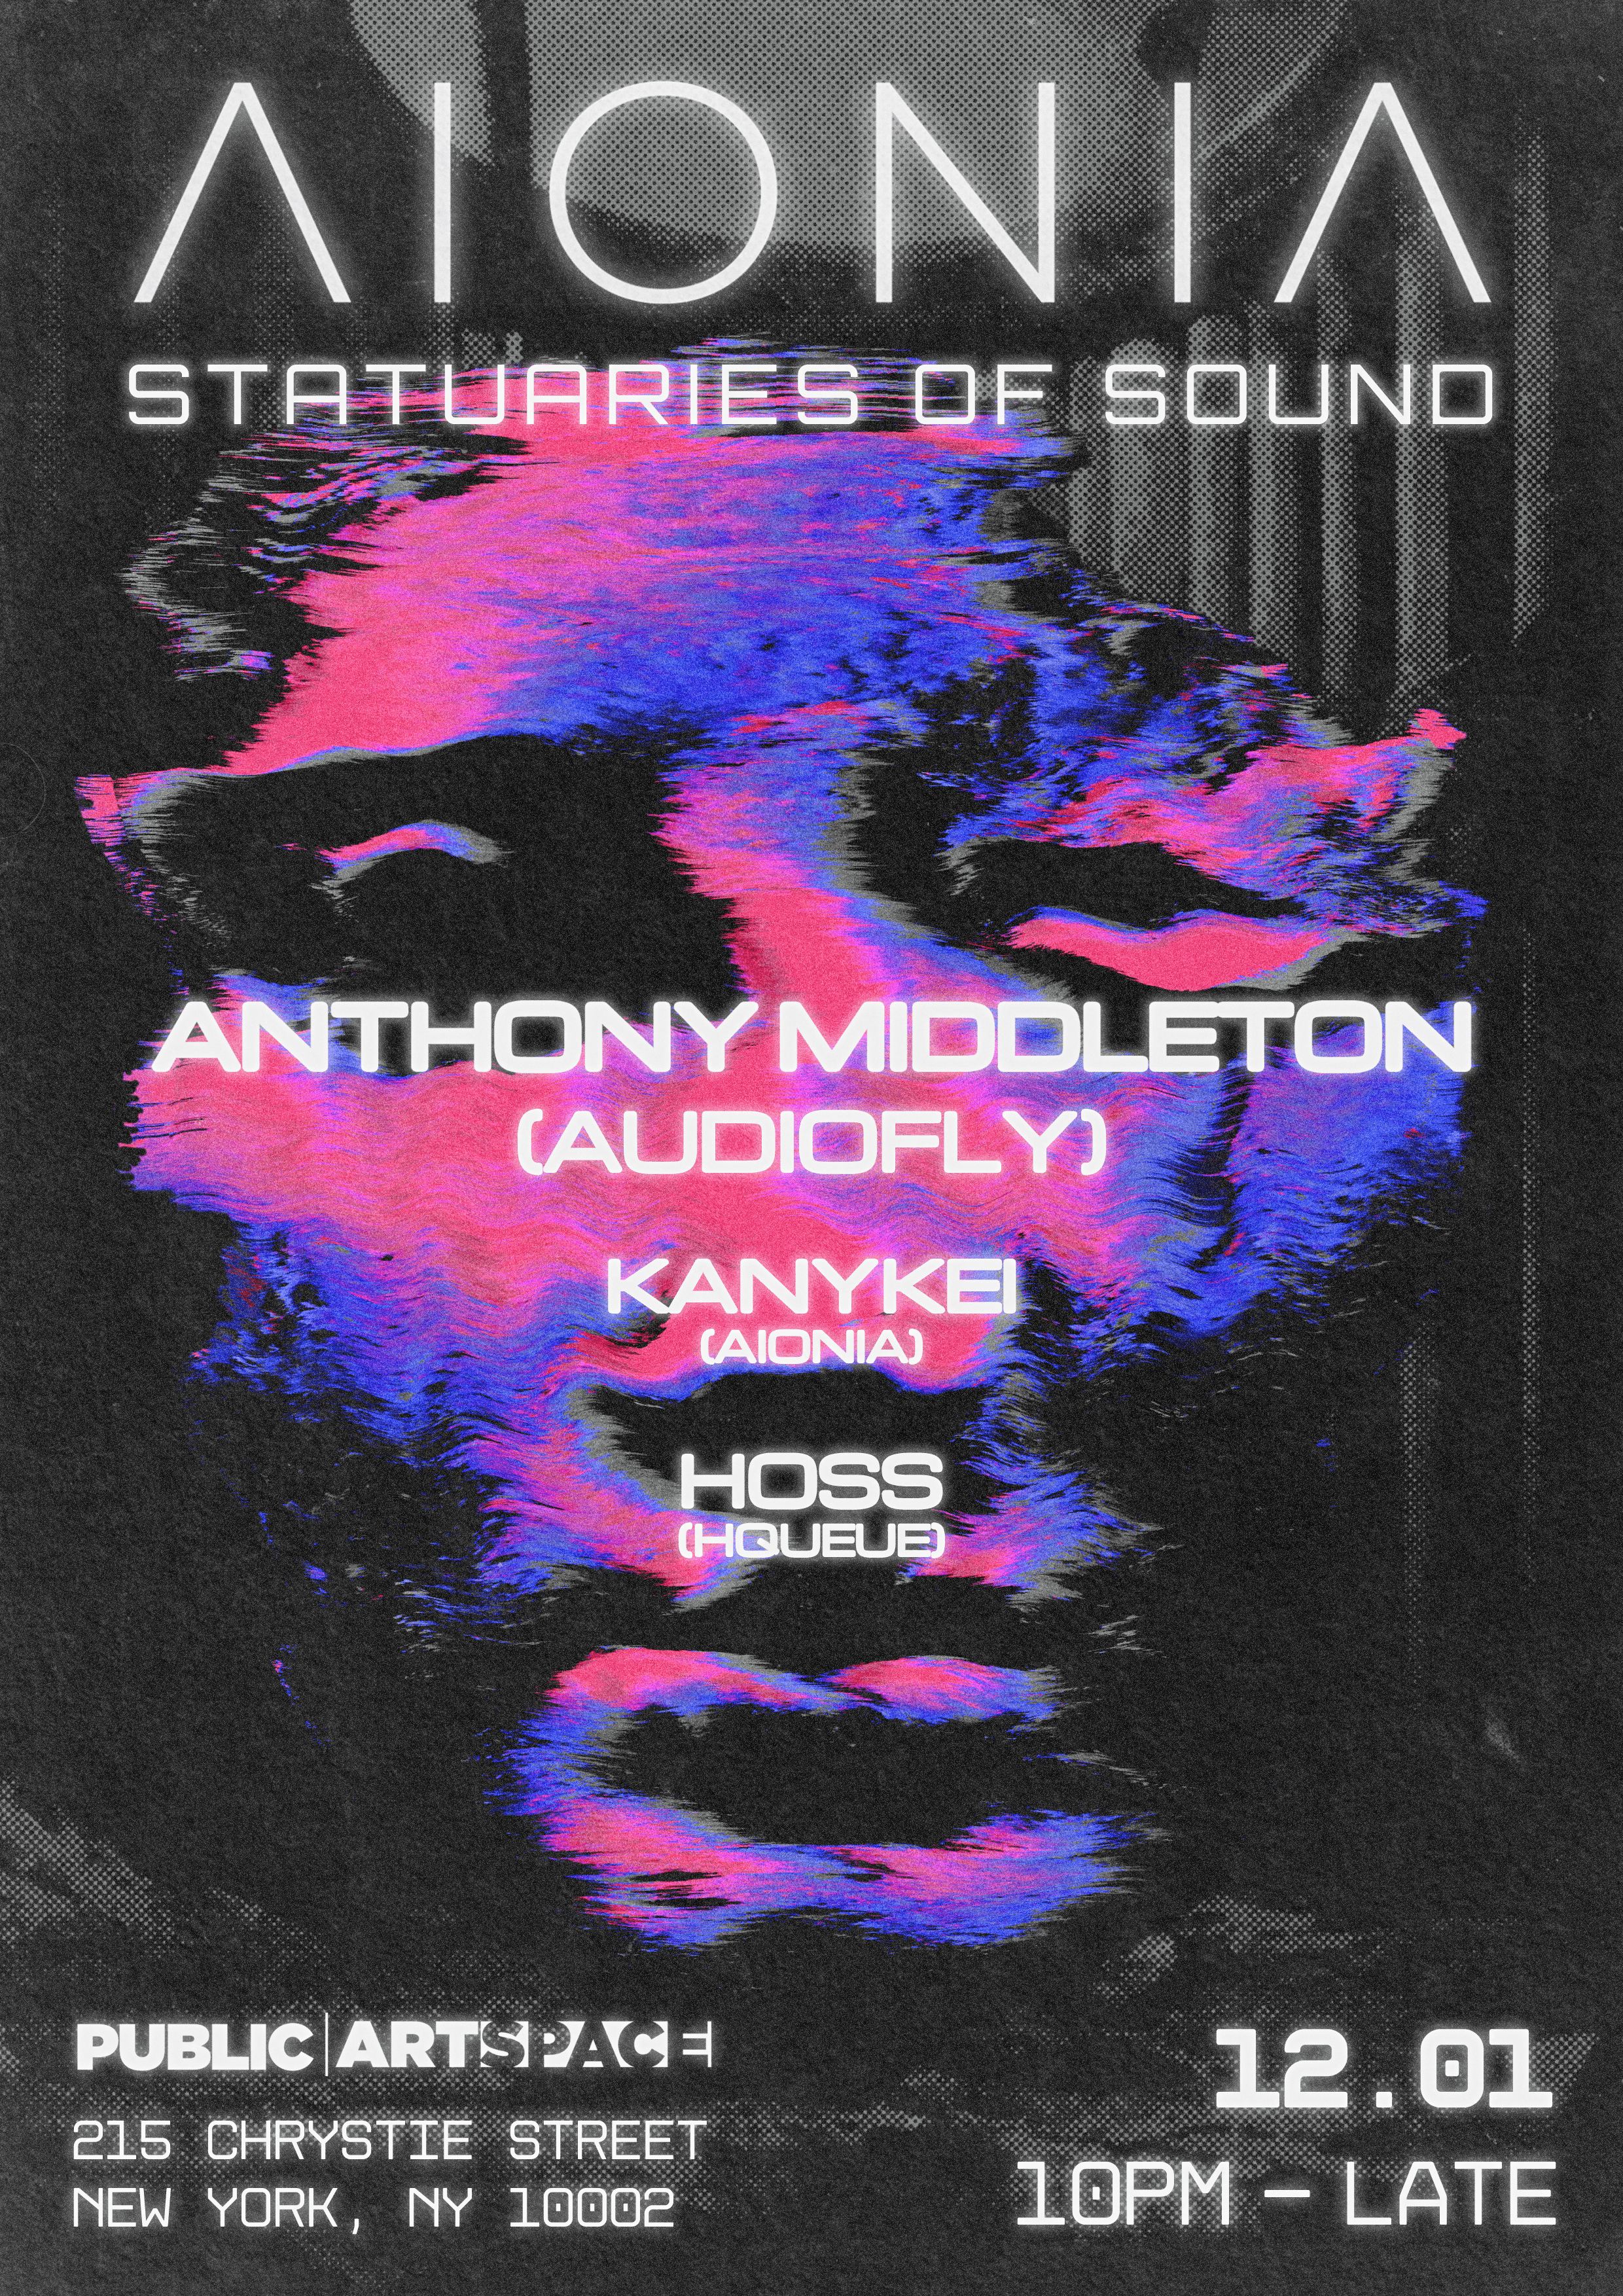 AIONIA: Statuaries of Sound w/ Anthony Middleton (AUDIOFLY), Kanykei, Hoss - フライヤー裏